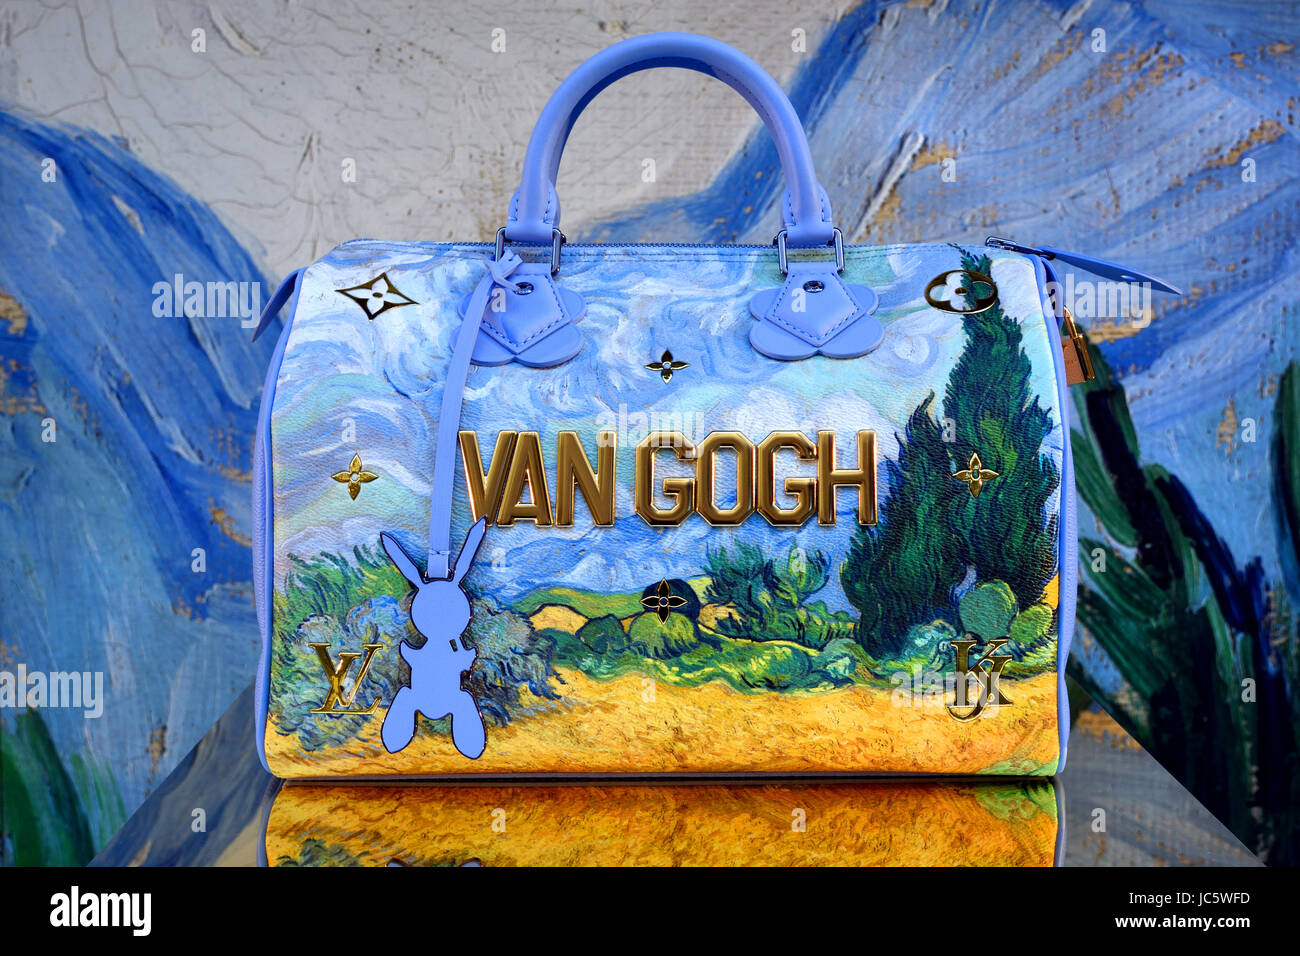 LOUIS VUITTON Masters Van Gogh Keepall Bandouliere 50 459062